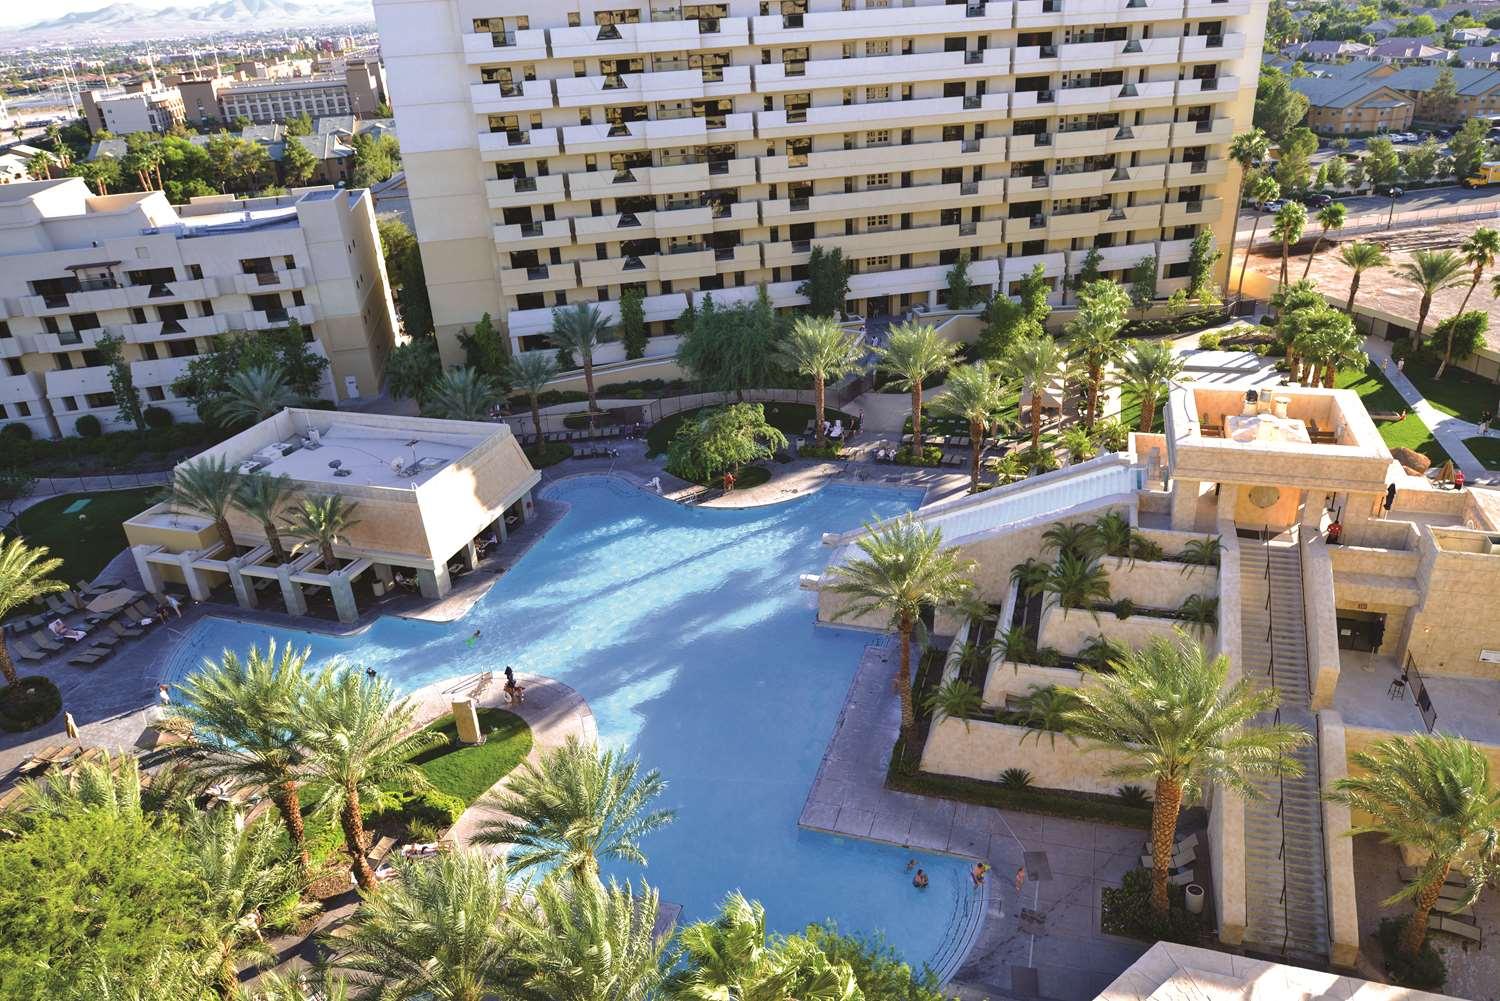 Hilton Vacation Club Cancun Resort Las Vegas in Las Vegas, NV